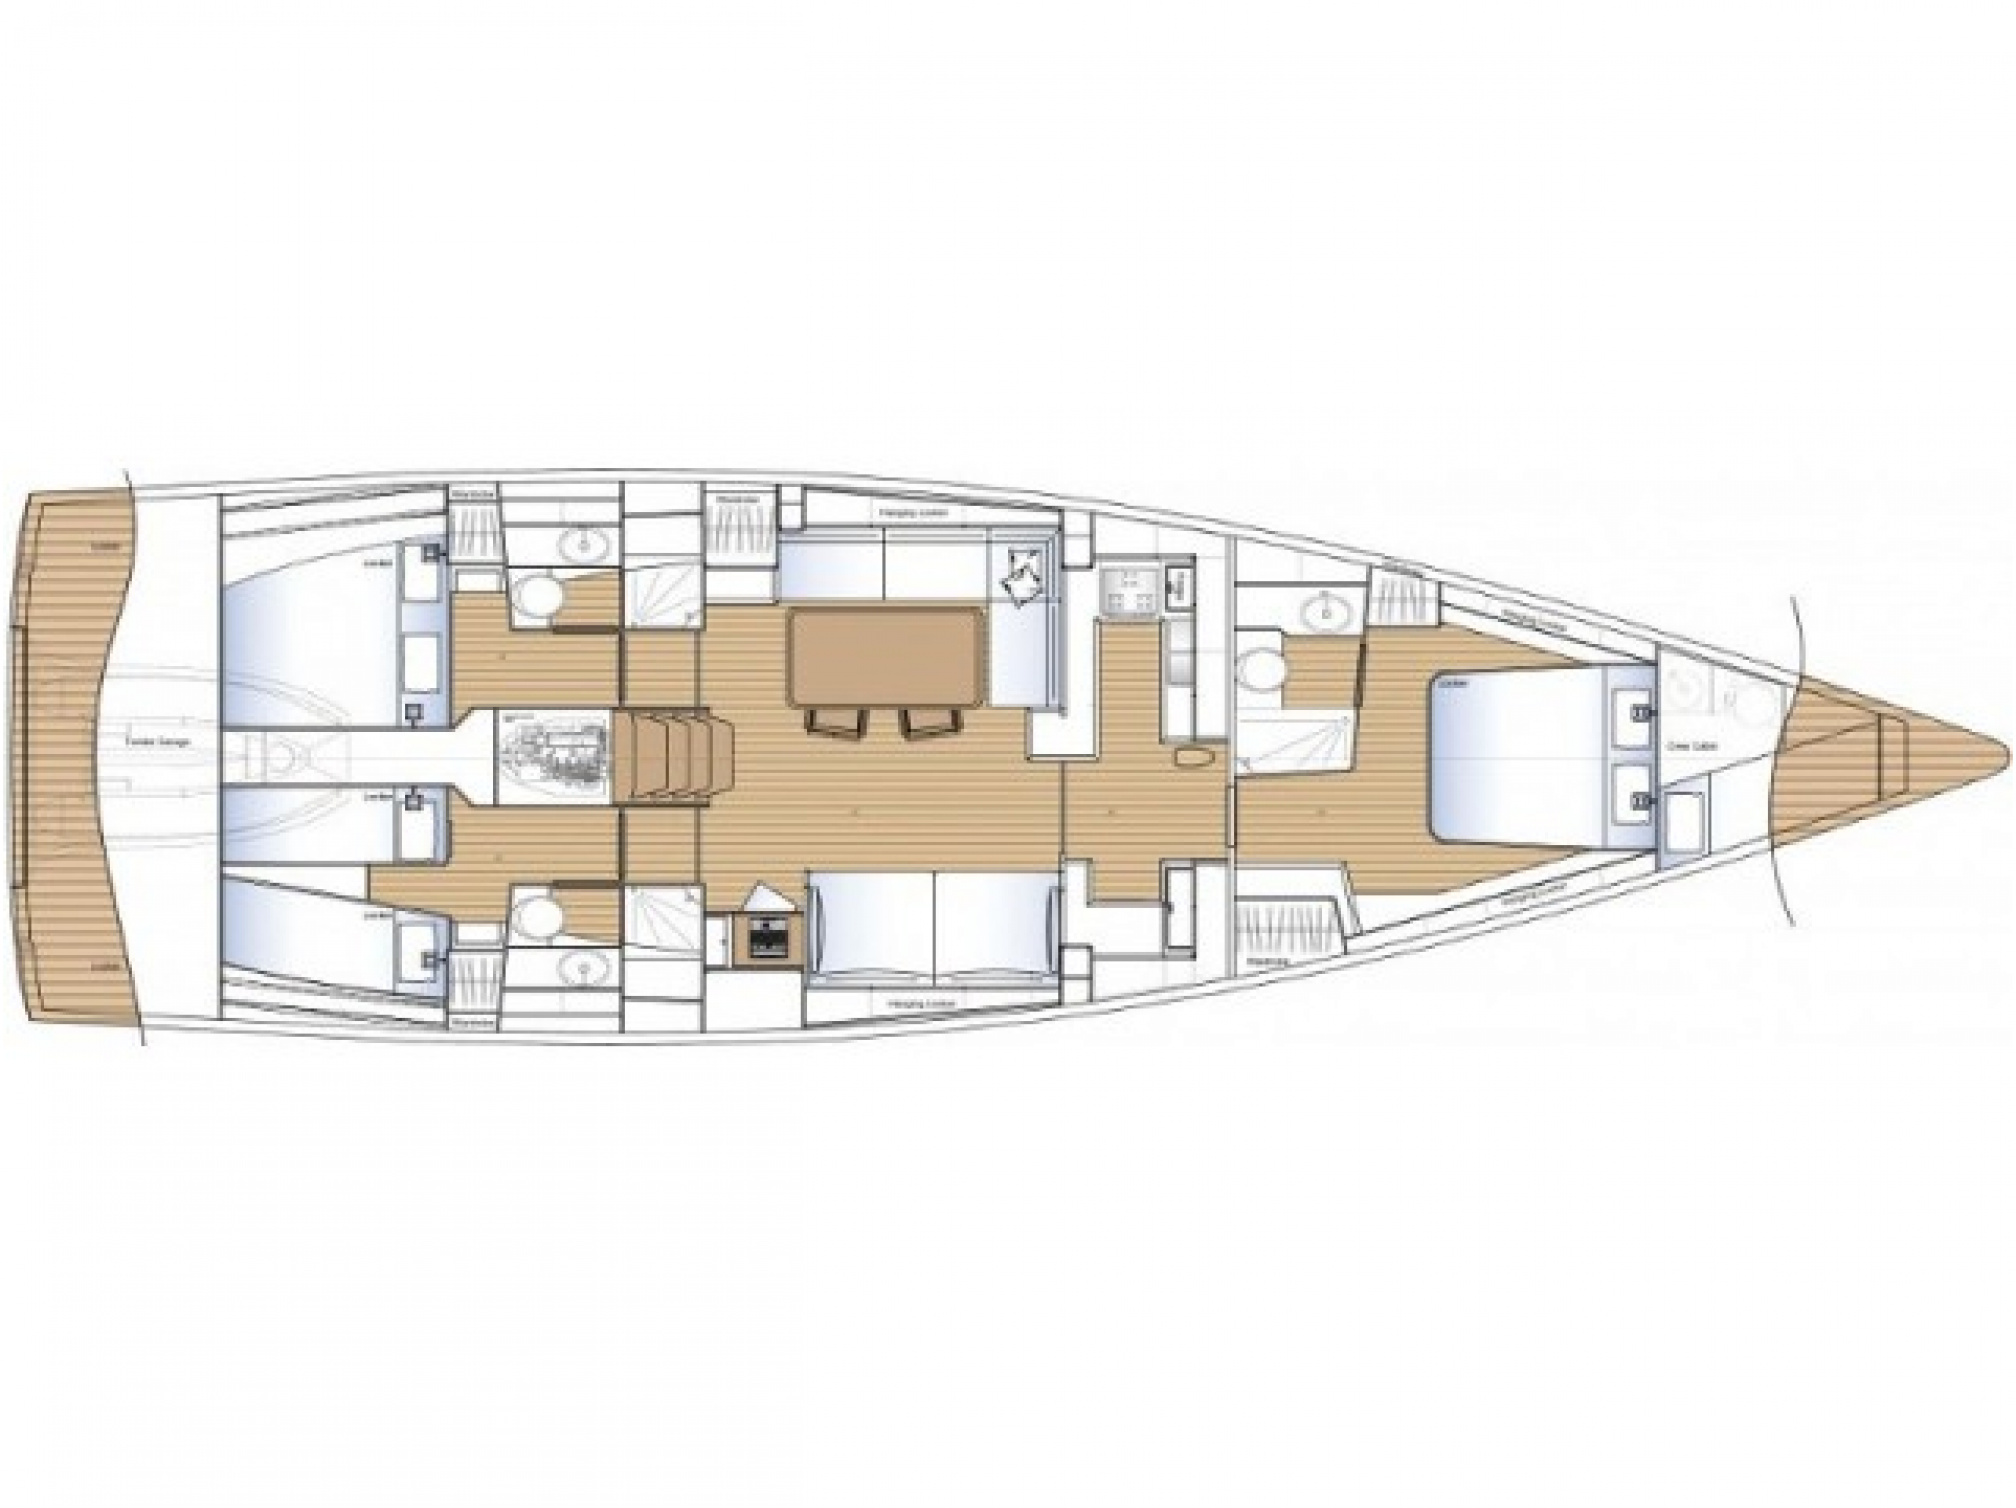 Solaris 58 charter luxury sailboat layout